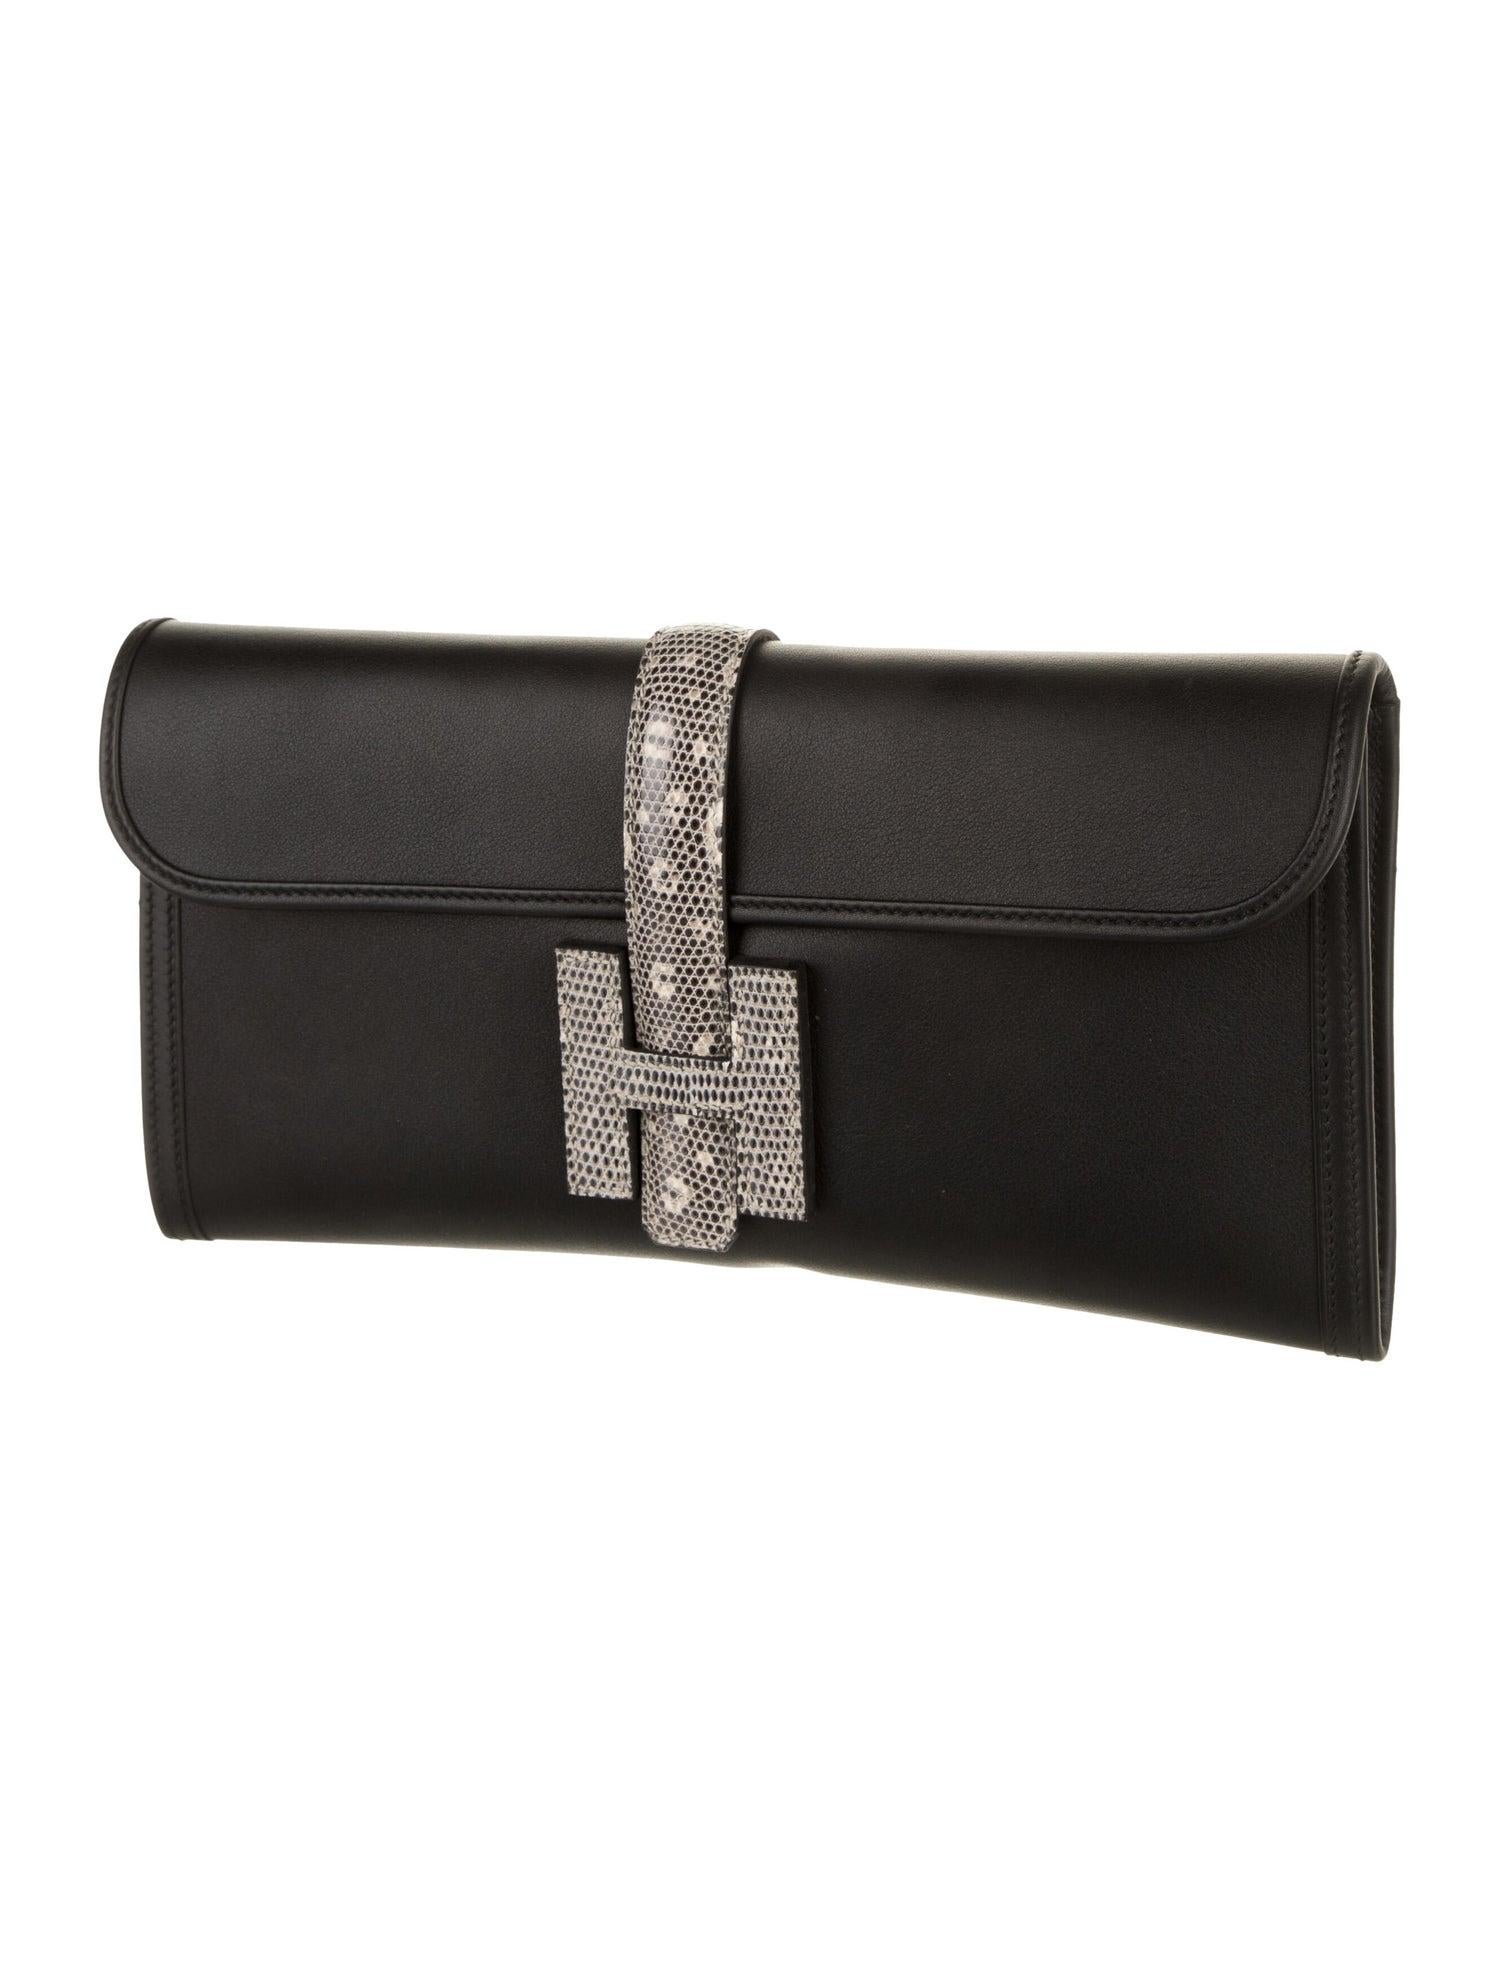 Women's Hermes NEW Black Leather Lizard 'H' Logo Envelope Evening Clutch Bag in Box 